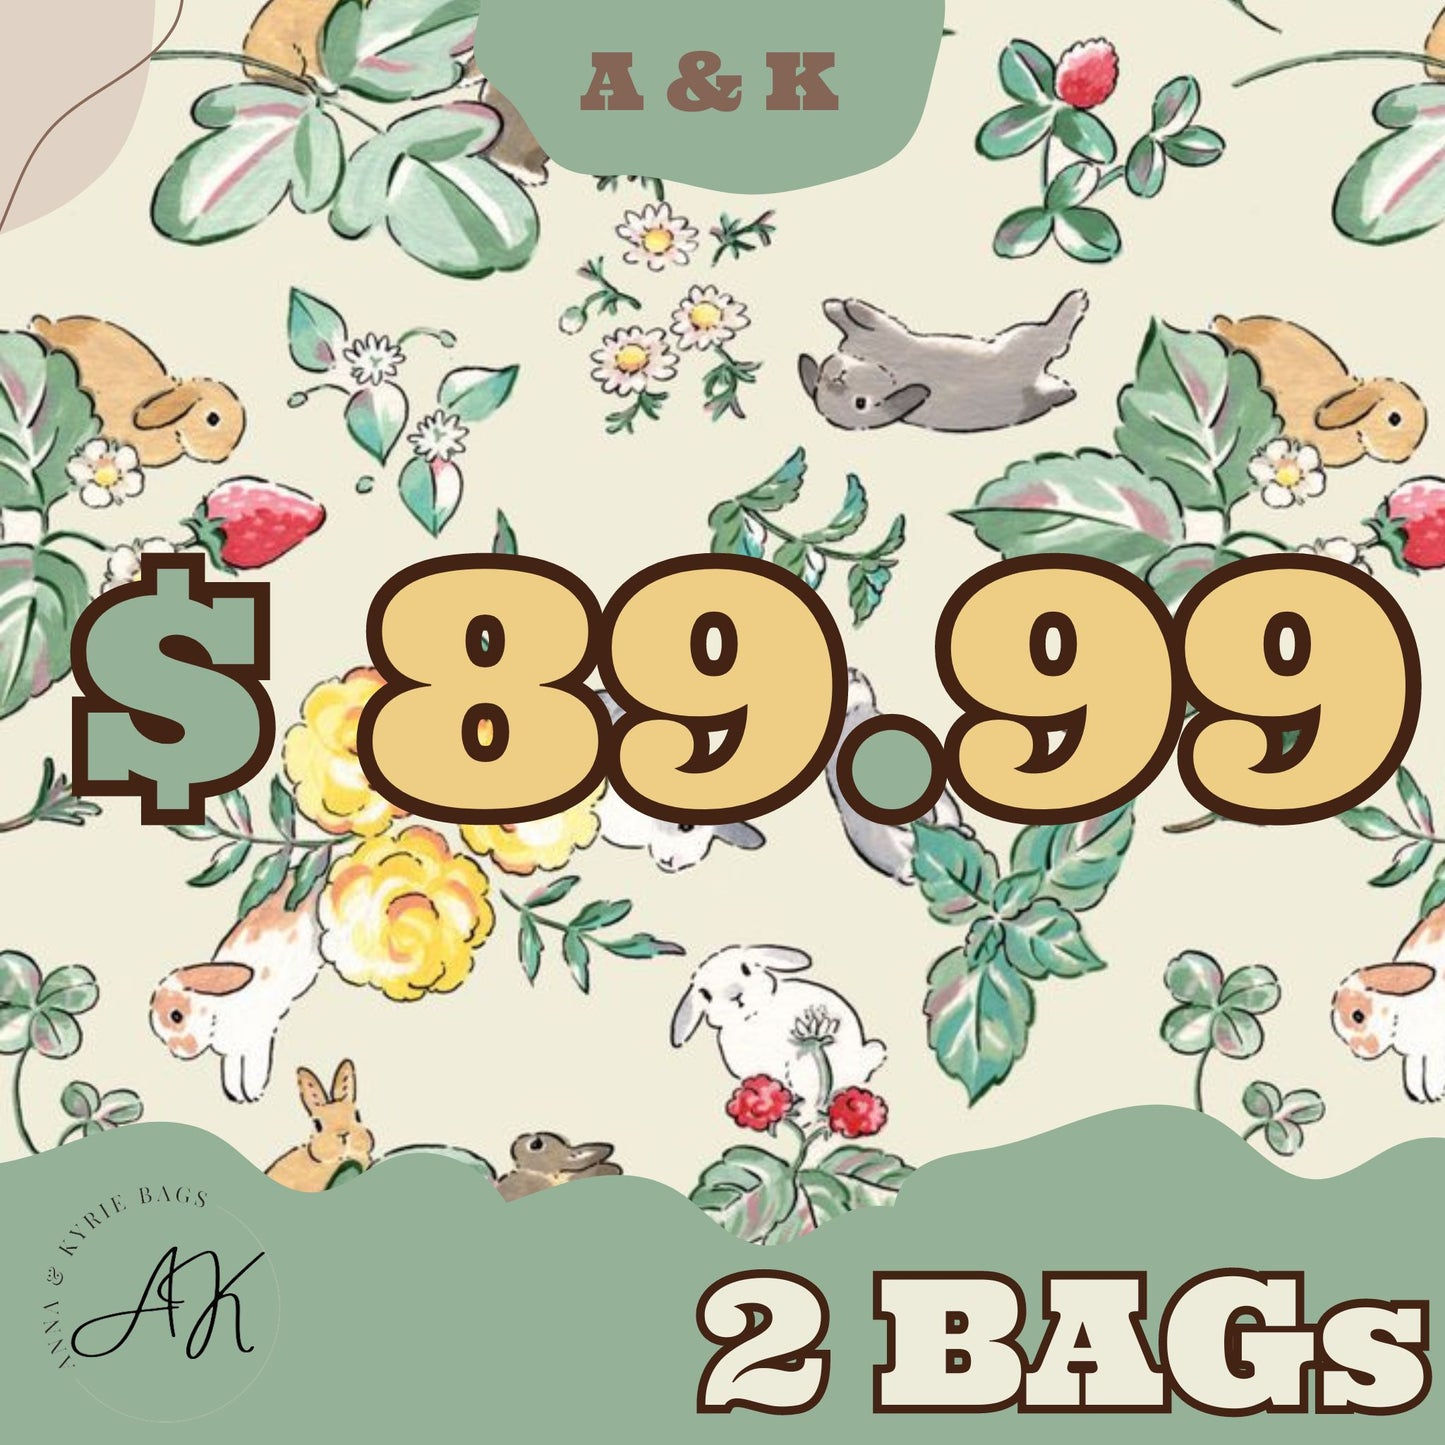 2 *39.99 A&K bags